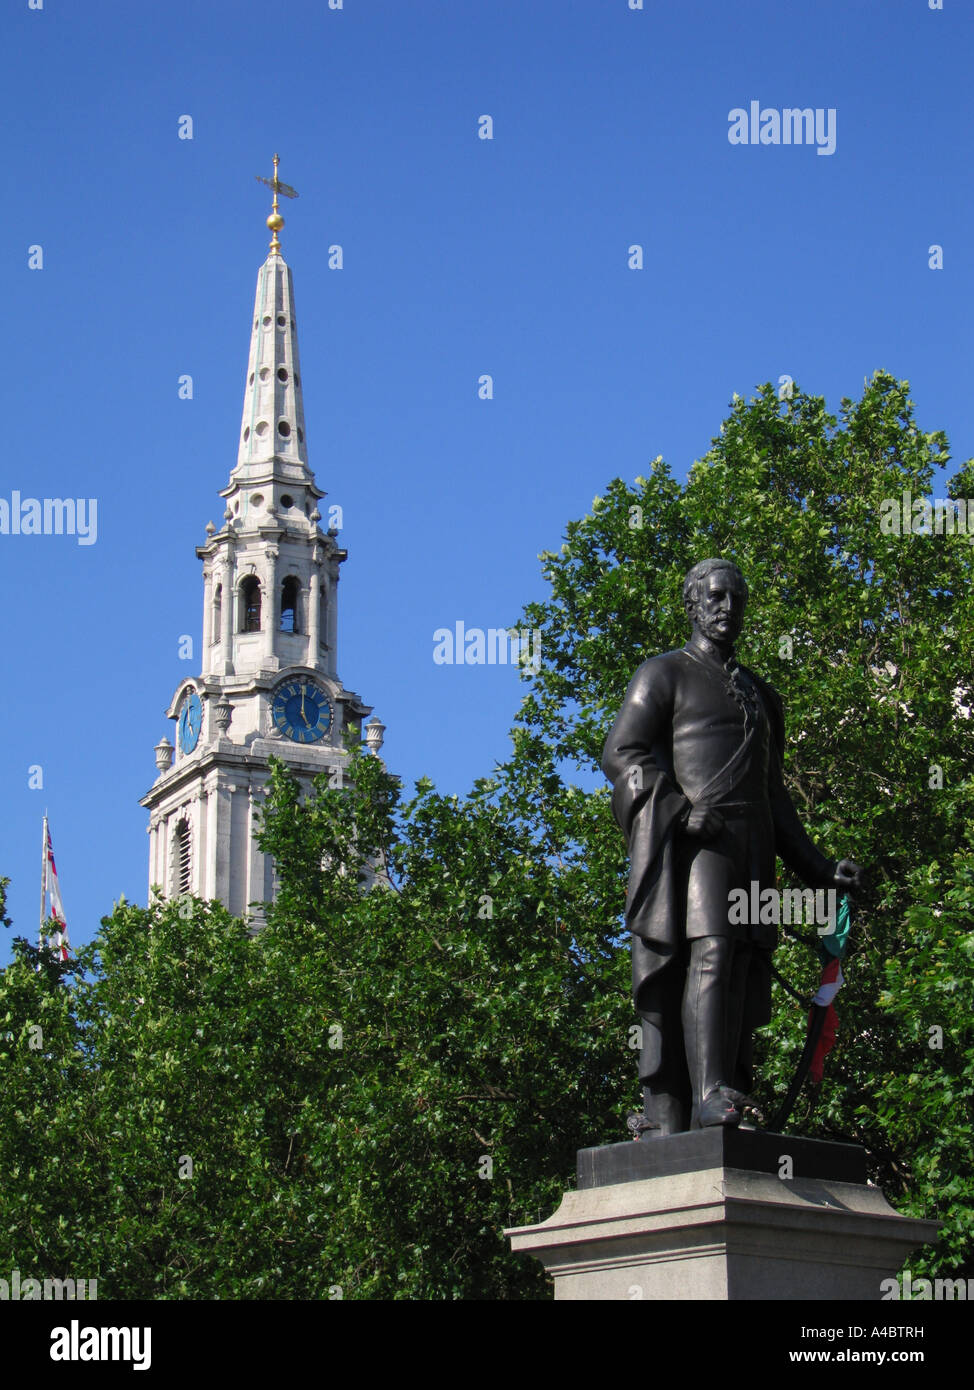 St. Martin in die Felder und die Statue von Major General Sir Henry Havelock City of Westminster London UK Stockfoto